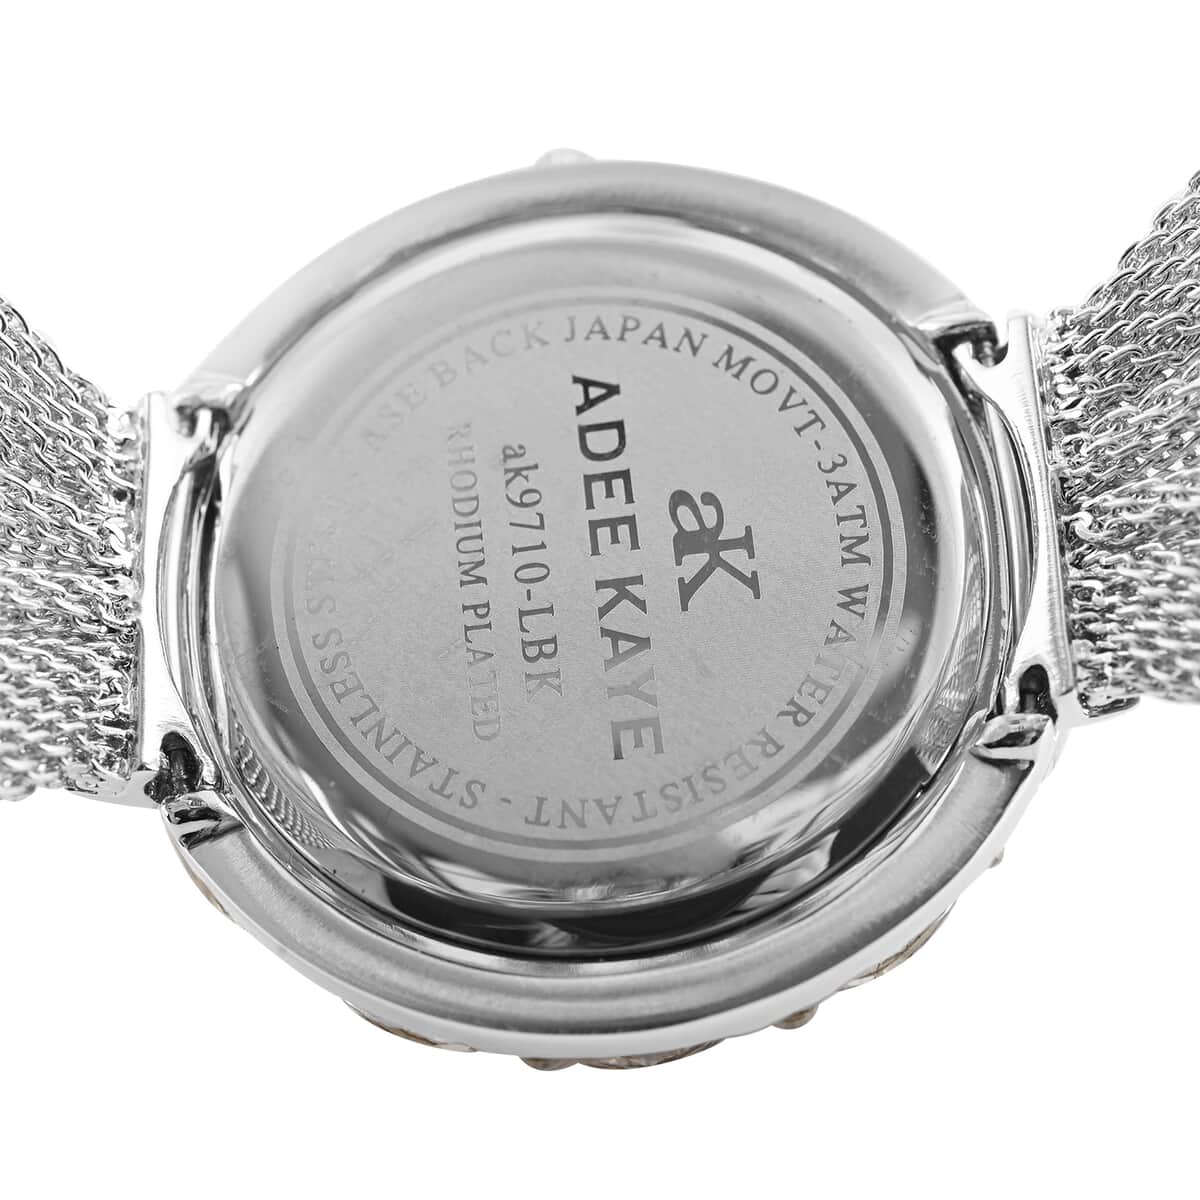 ADEE KAYE Austrian Crystal Japan Quartz Movement Black Dial Watch in Silvertone Strap (40.9 mm) | Women's Designer Watch | Analog Luxury Wristwatch image number 4